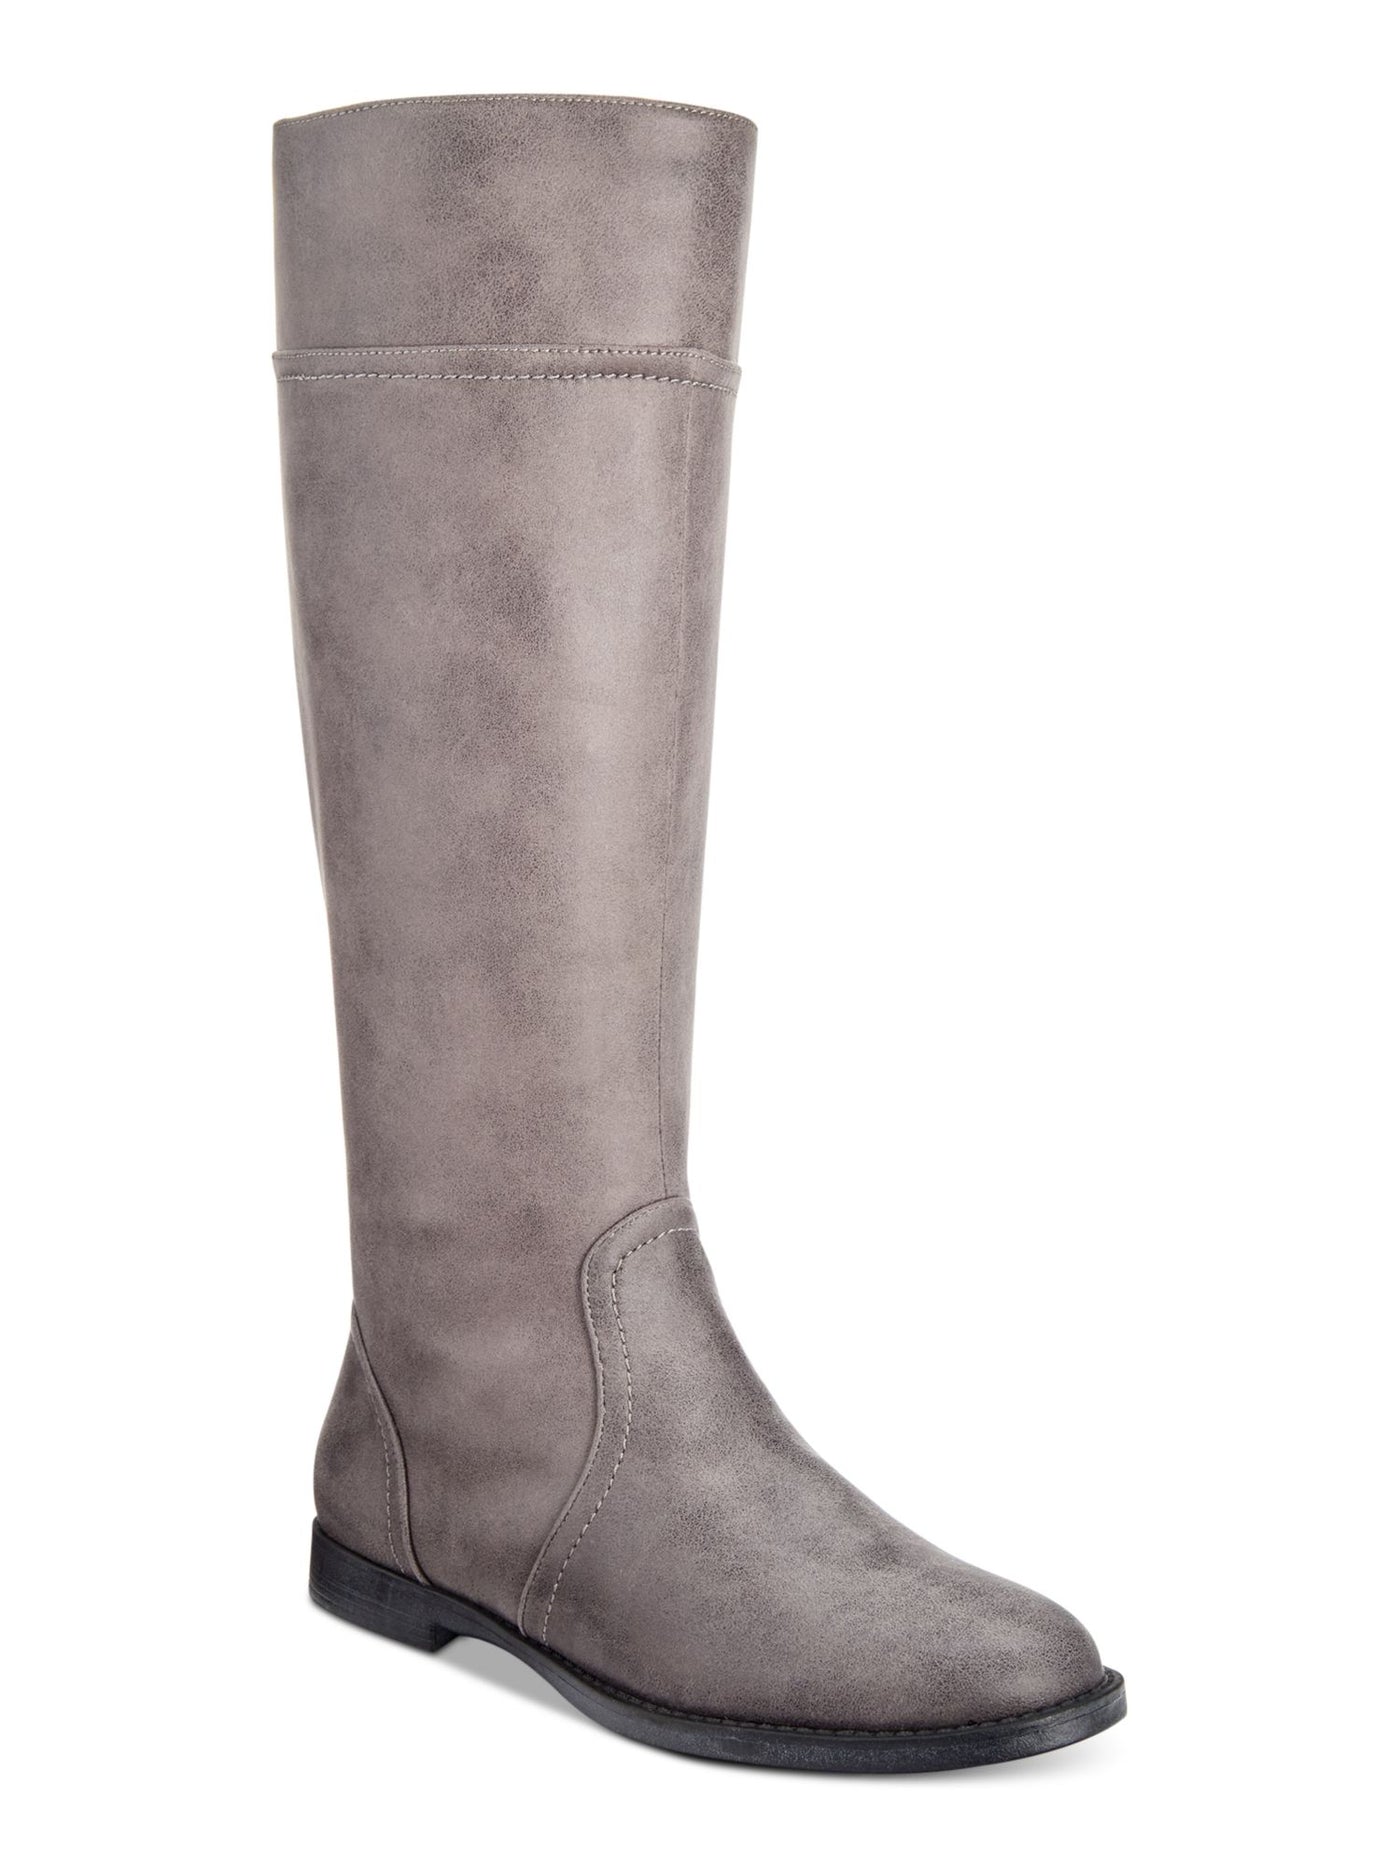 BELLA VITA Womens Gray Cushioned Rebecca Ii Round Toe Zip-Up Boots Shoes 6.5